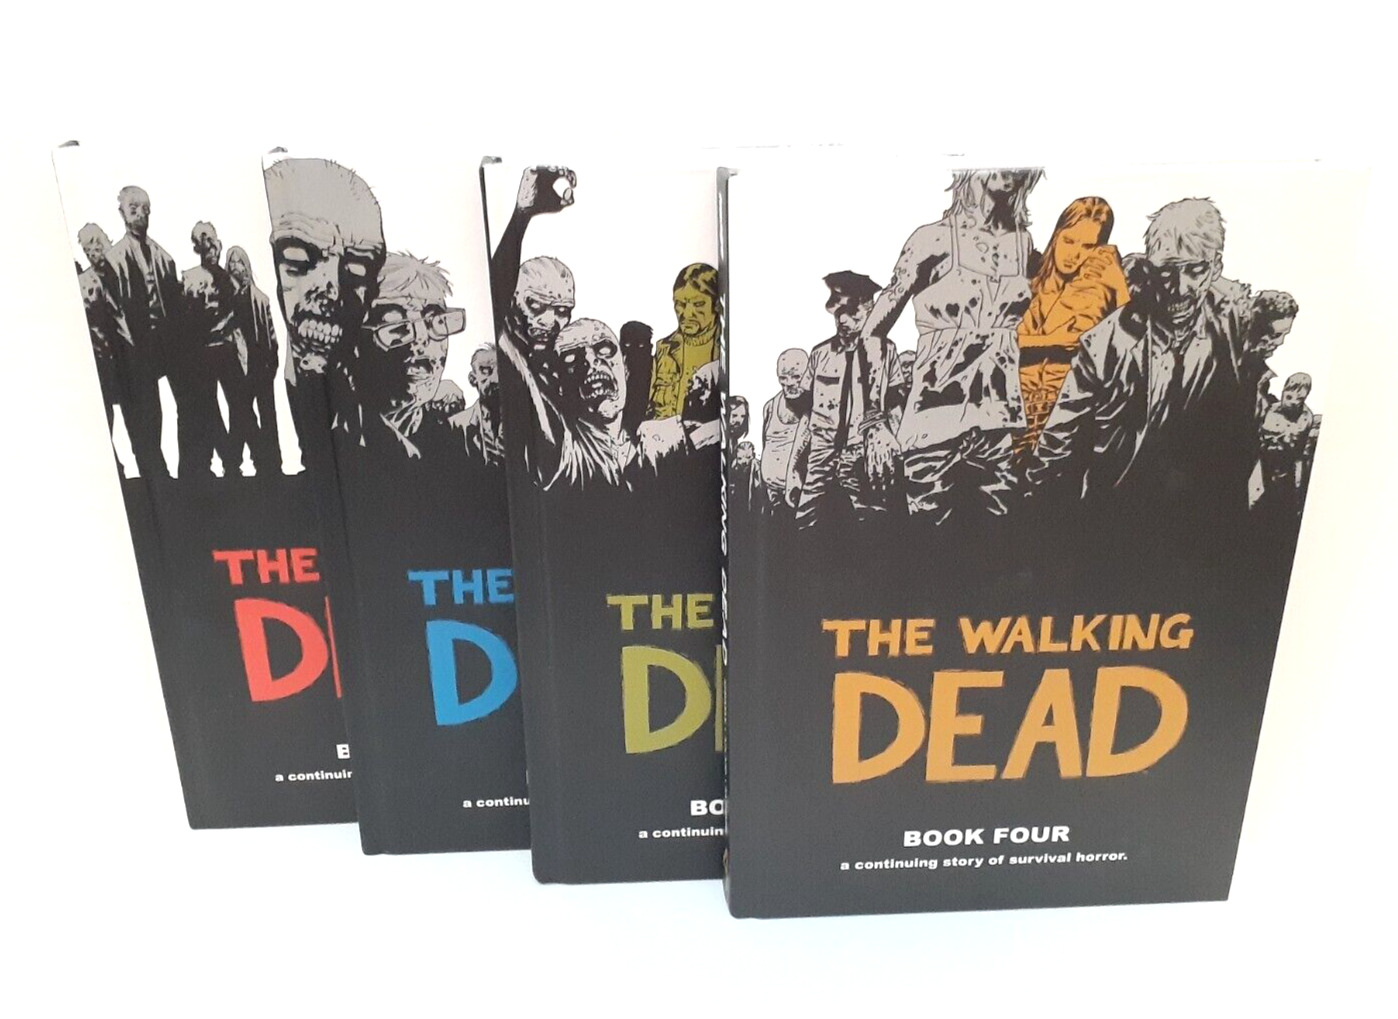 The Walking Dead Hardcover Volumes 1-4 Lot - Image Robert Kirkman